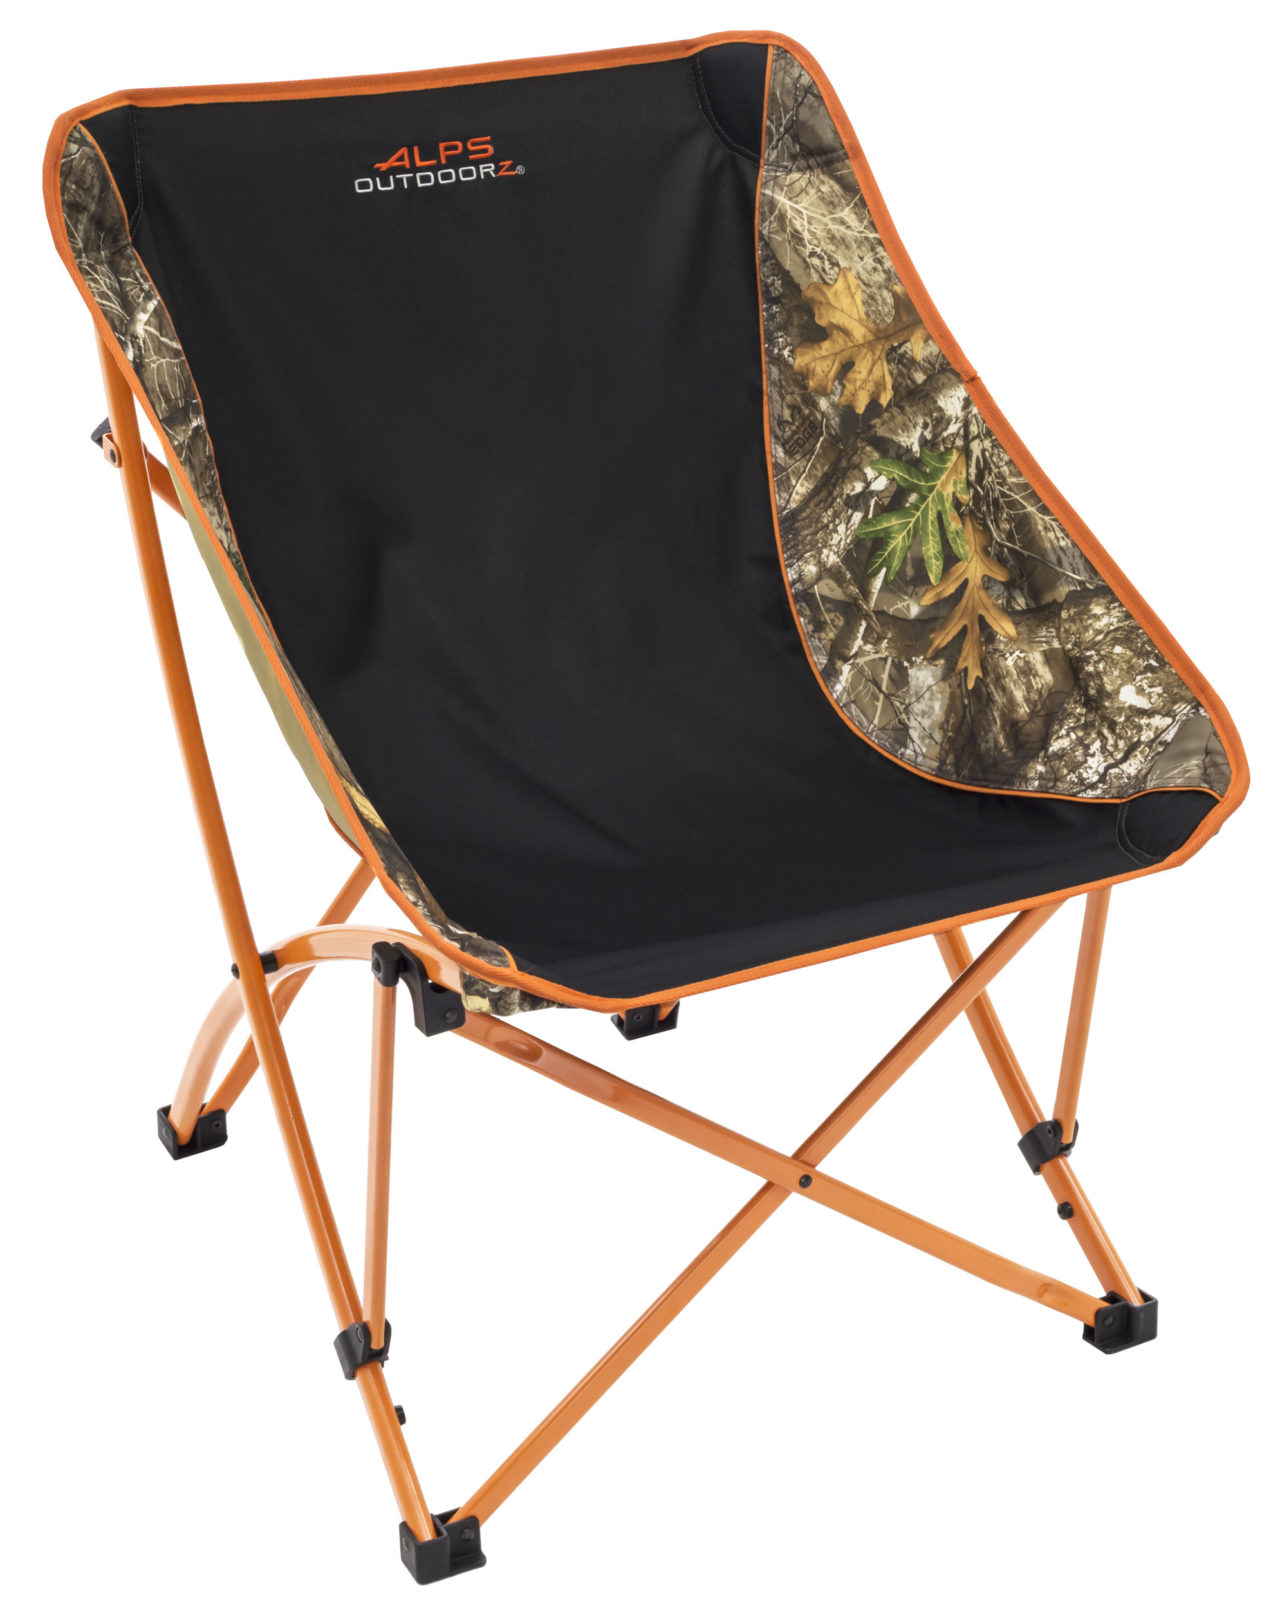 ALPS OutdoorZ New Recreational Chair: The Crosshair